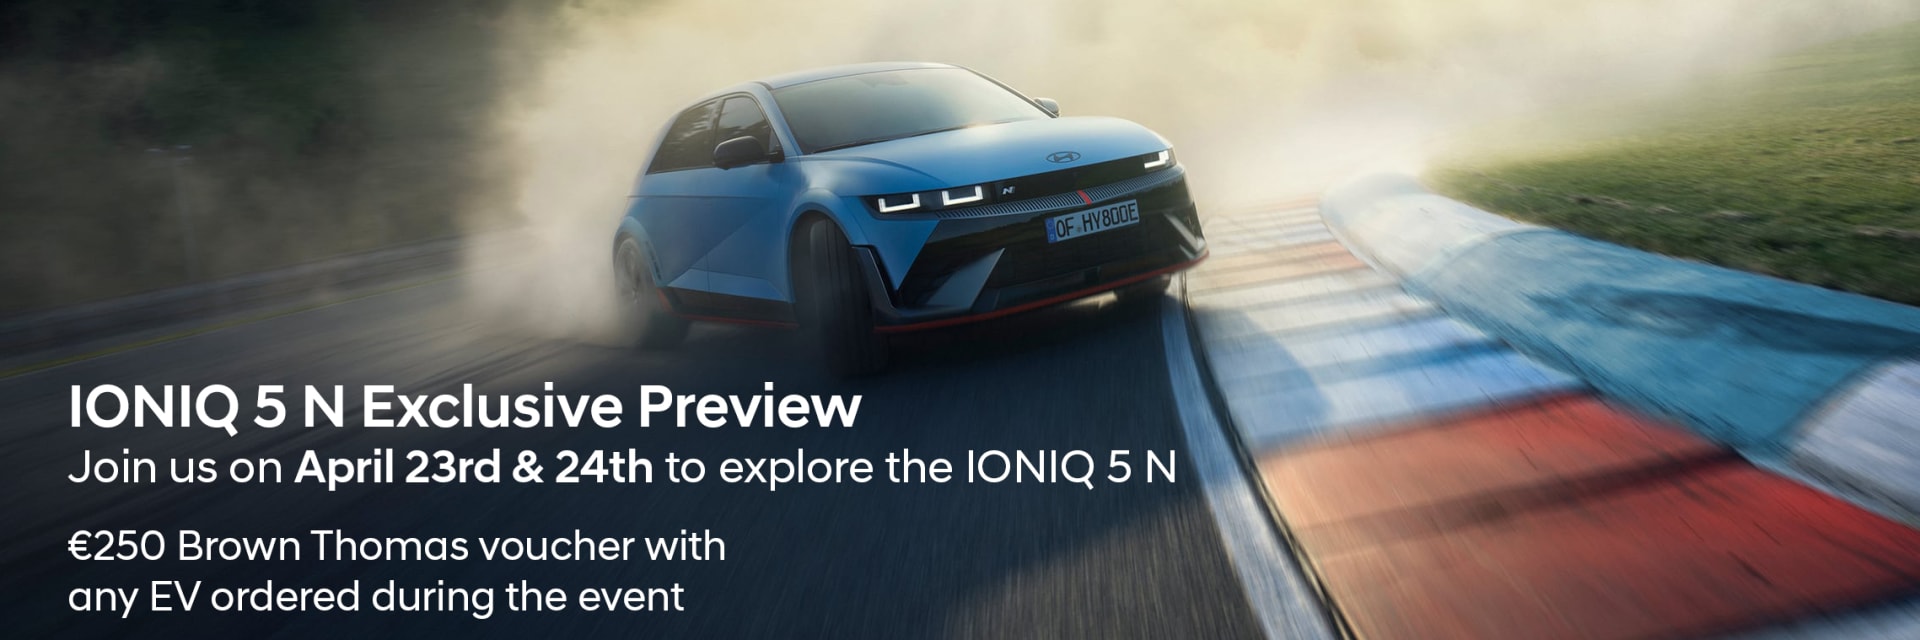 IONIQ 5 N Preview